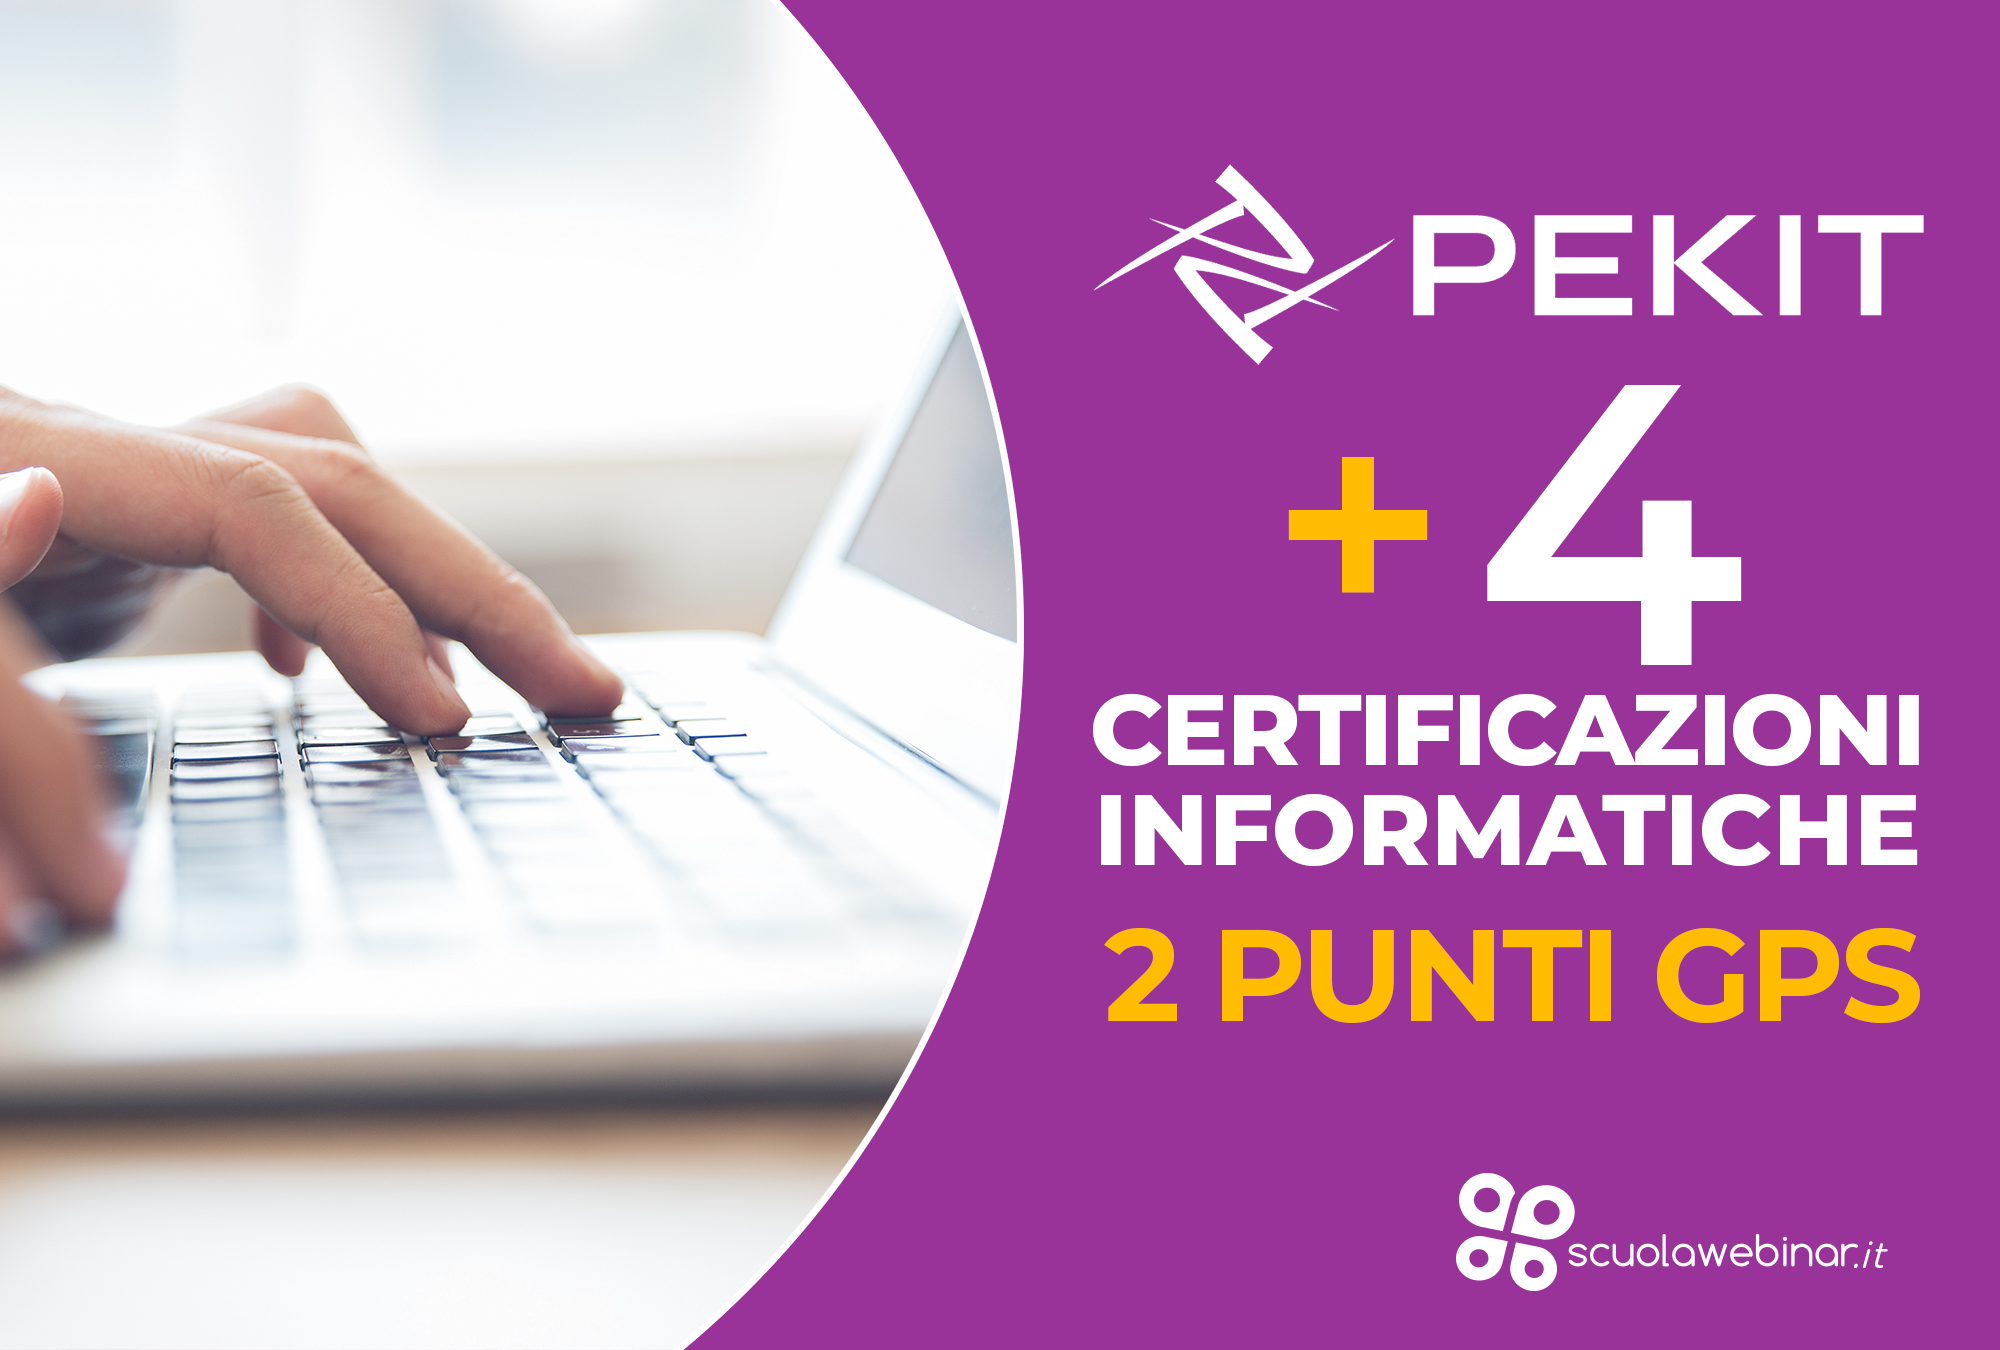 PEKIT + 4 certificazioni informatiche